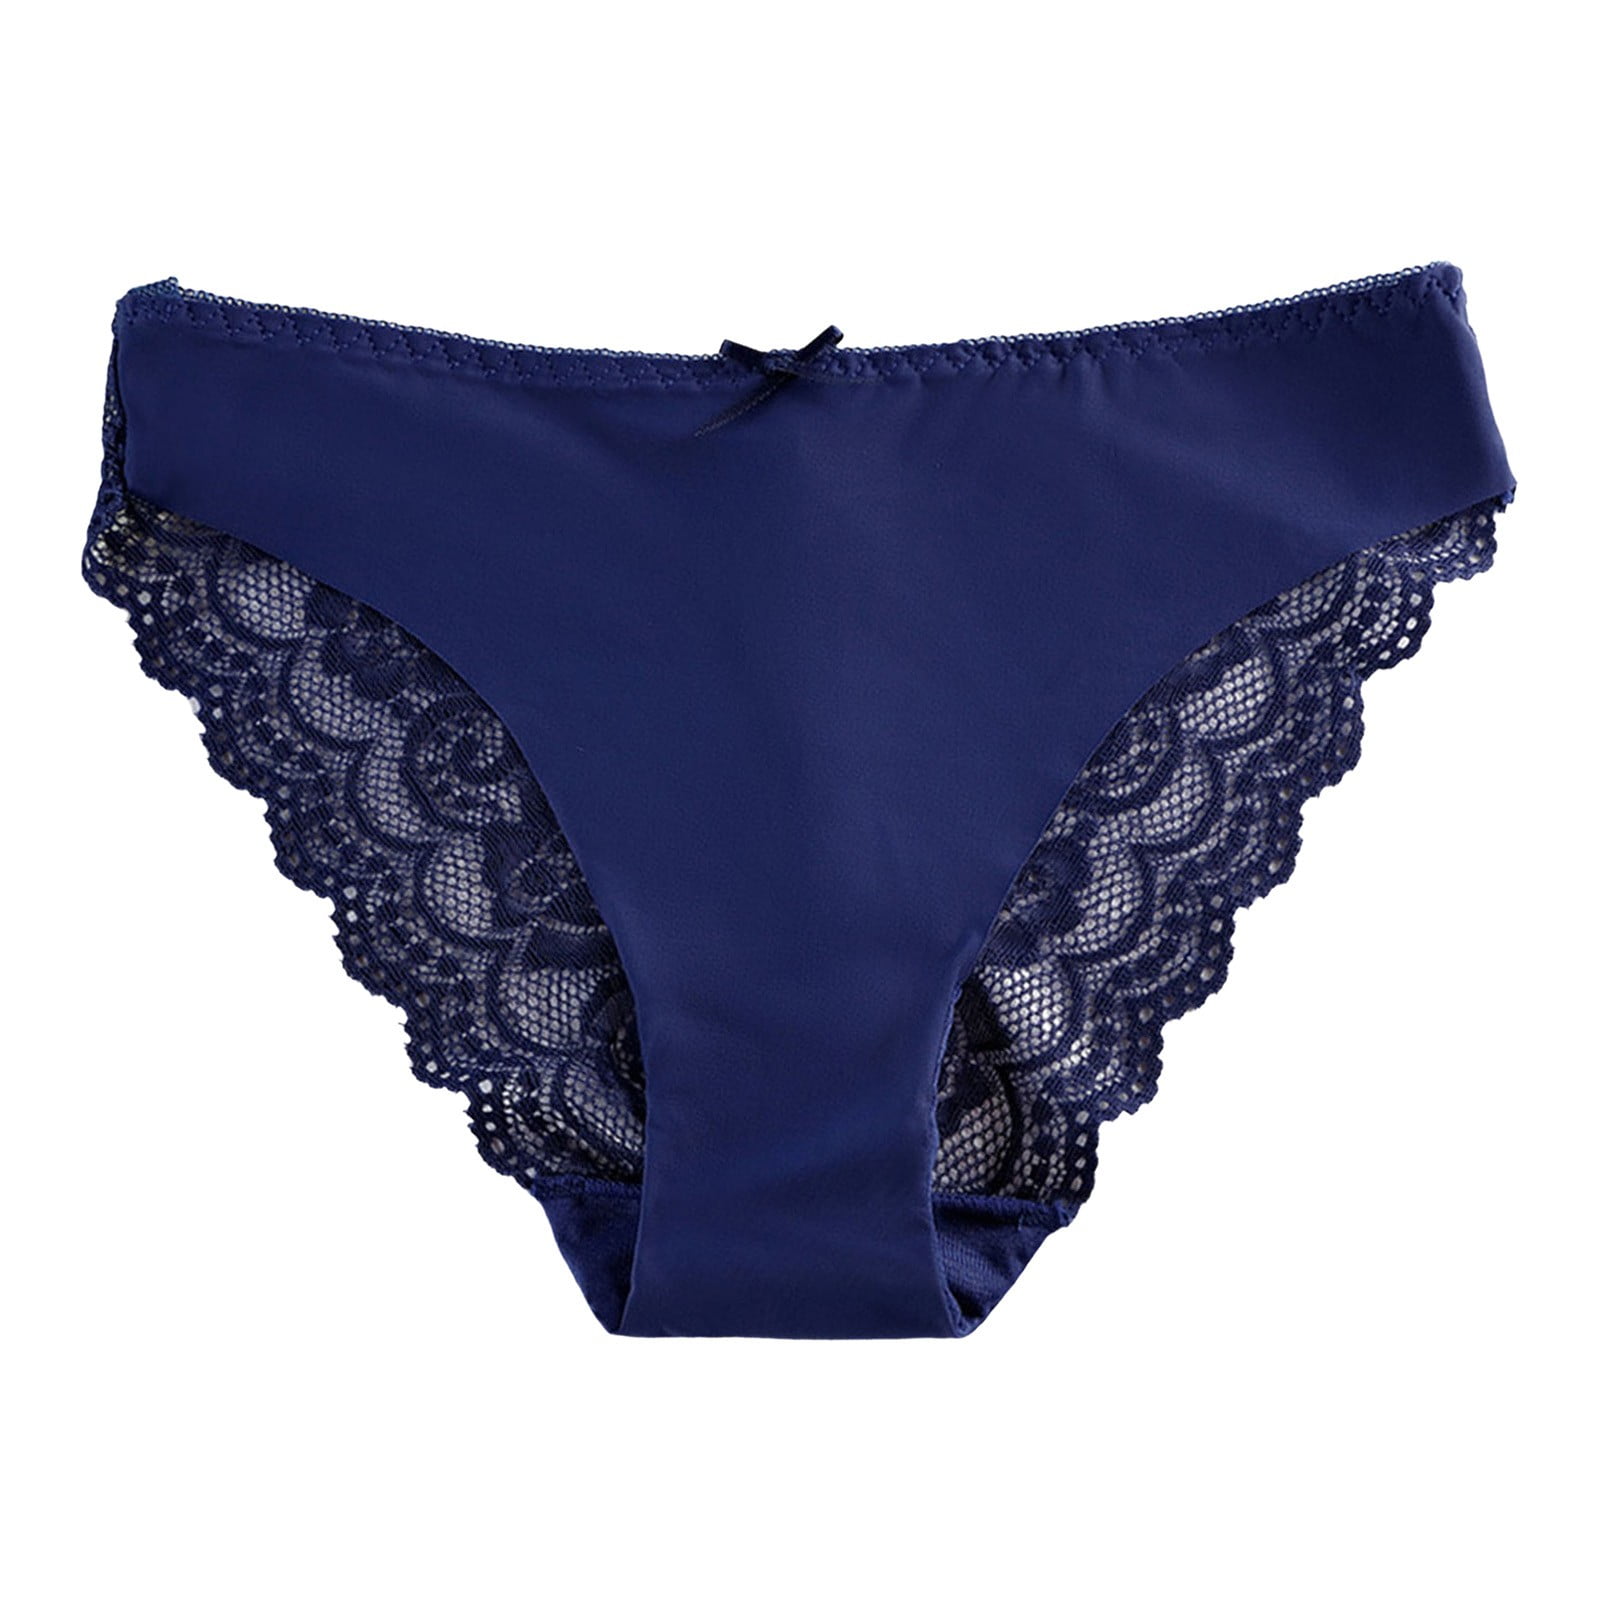 wolftale Women Panties Mid-waist Seamless Cotton Briefs Soft Underwear,  Gray Blue, XXL 